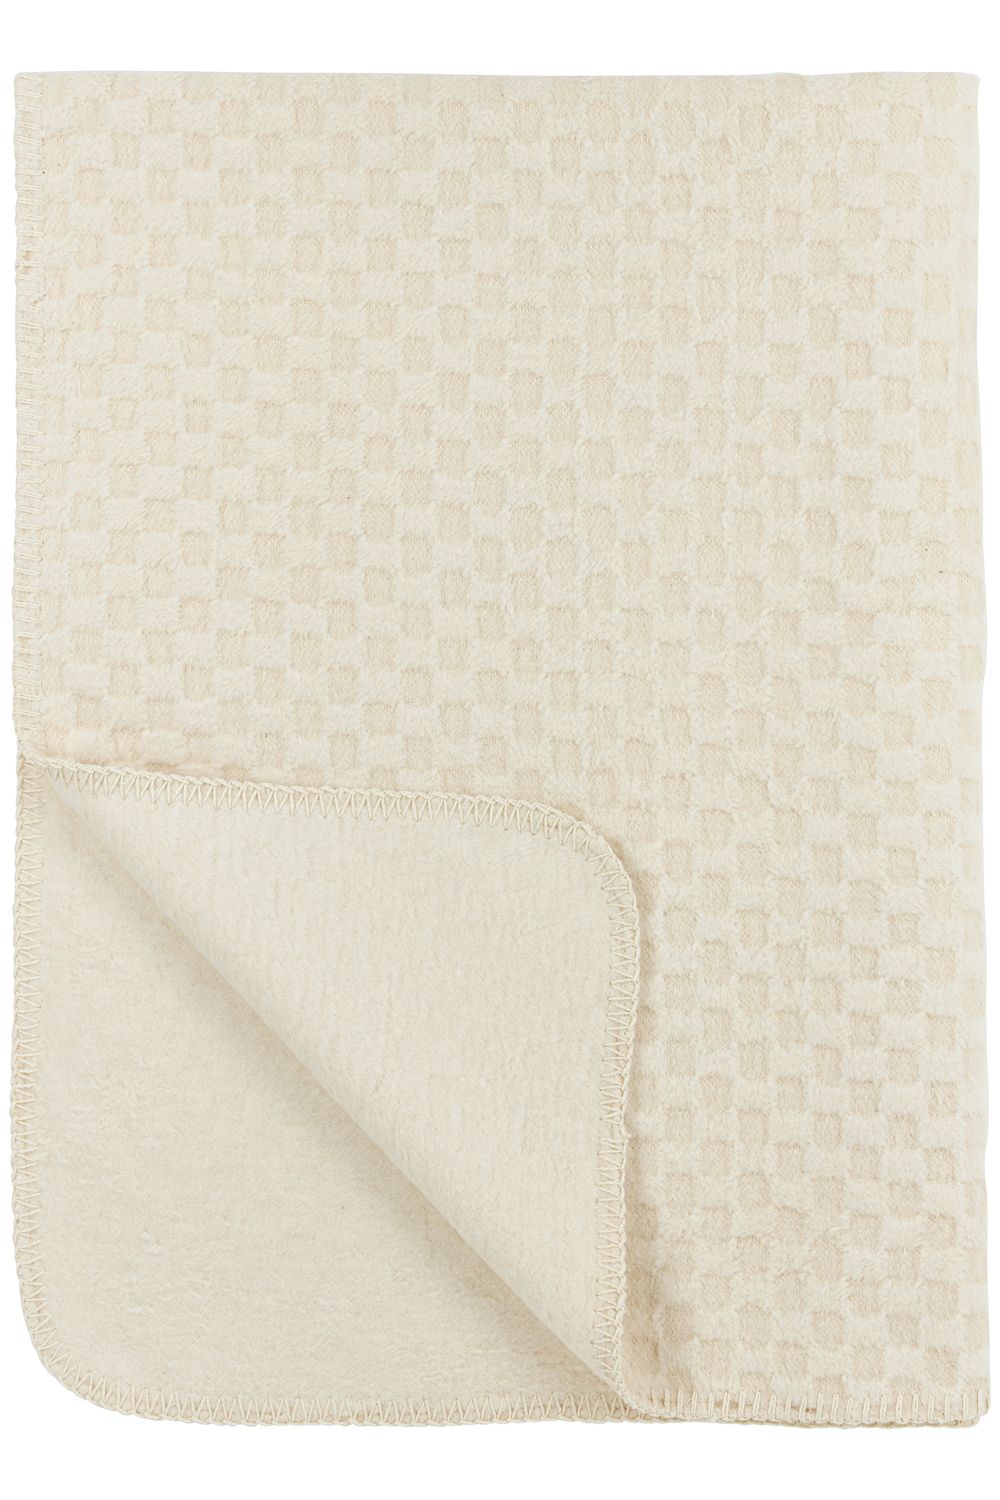 Meyco Cot Blanket Grid Natural Gots - 75x100 cm. - 75x100